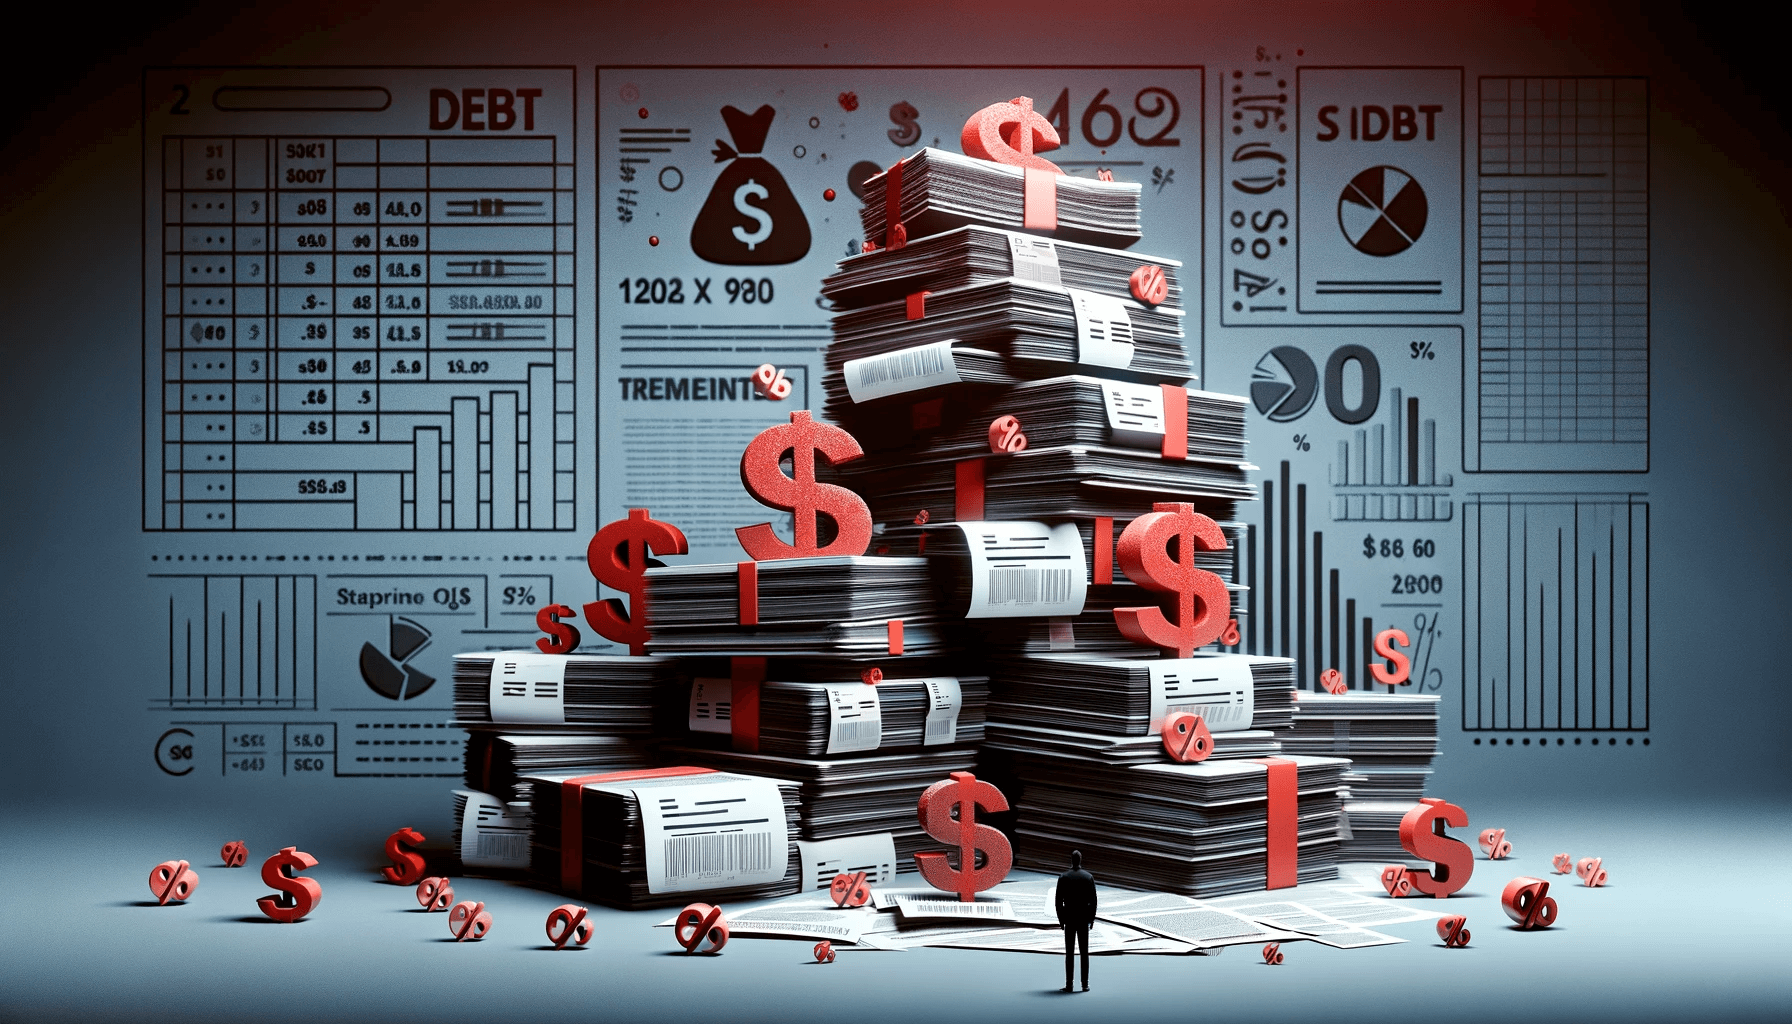 Debt piling up